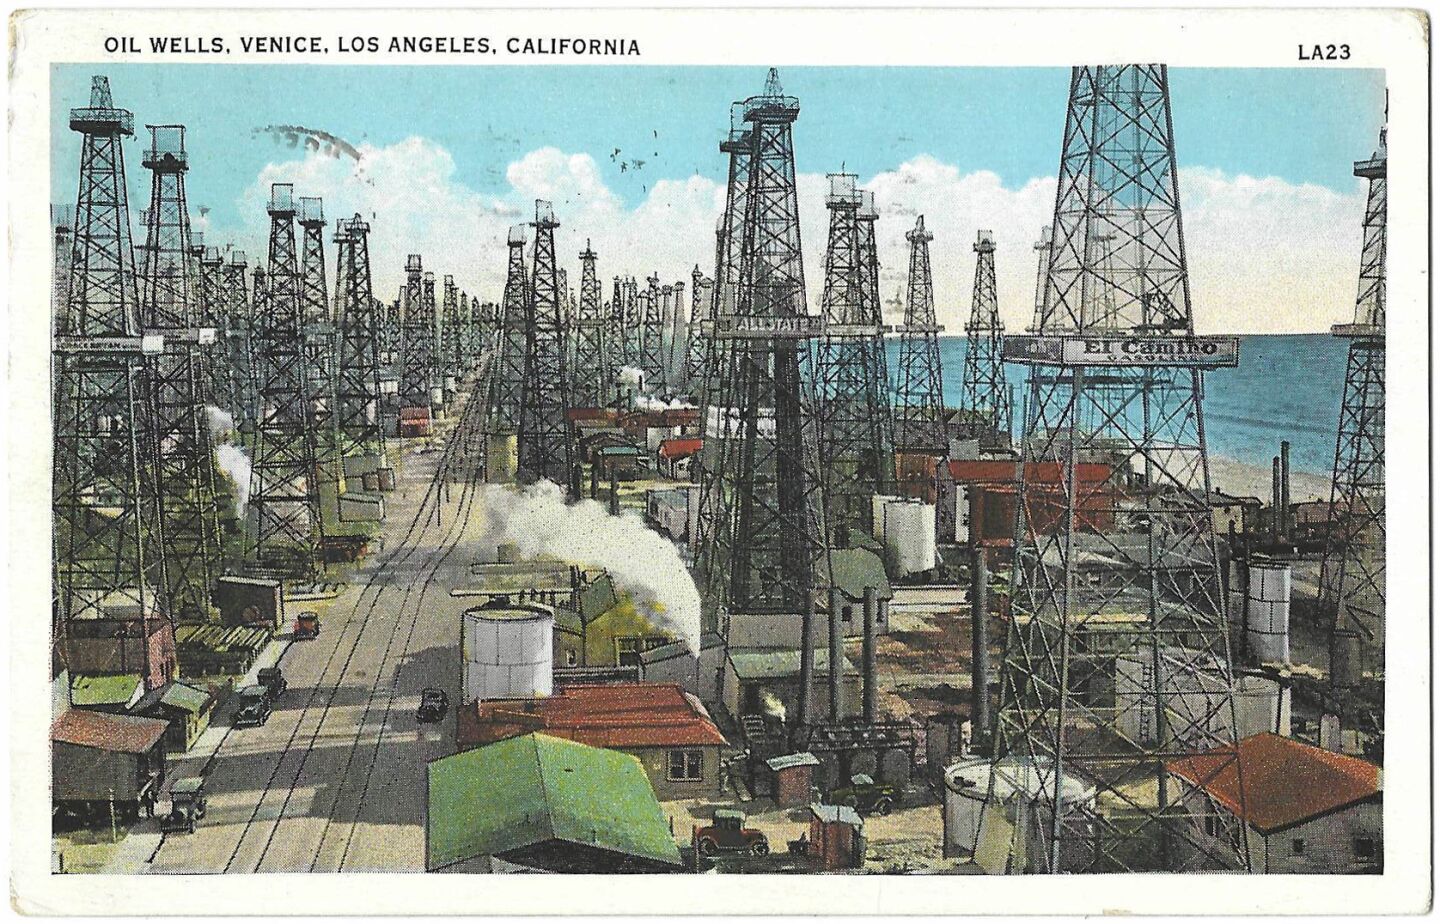 Vintage postcards show oil derricks in the L.A. area